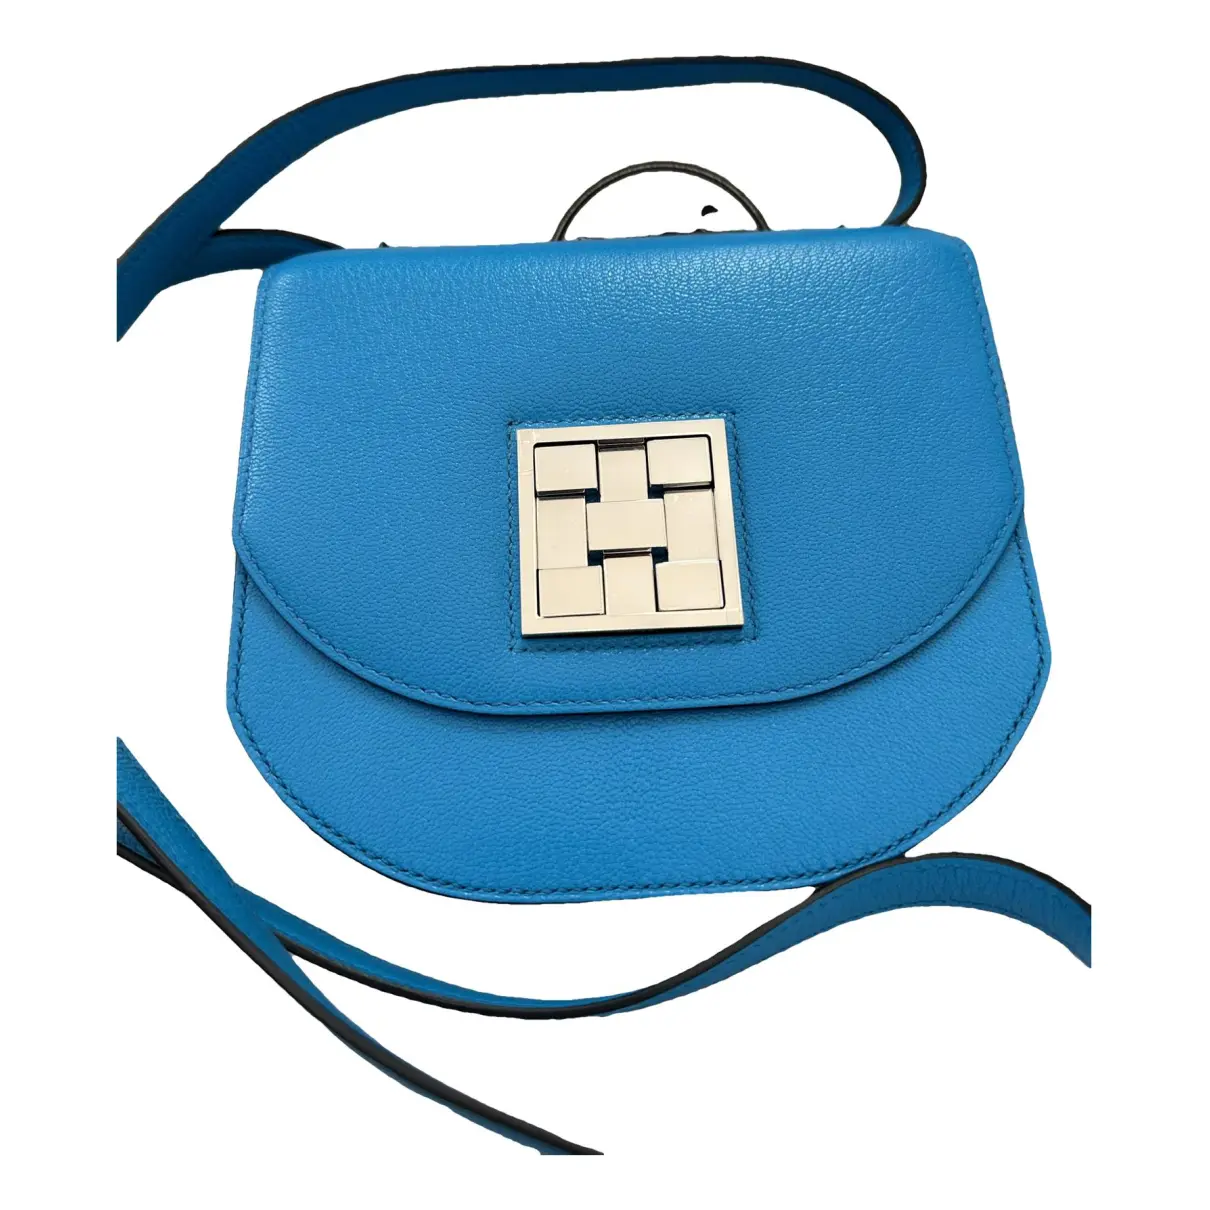 Mosaïque leather handbag Hermès